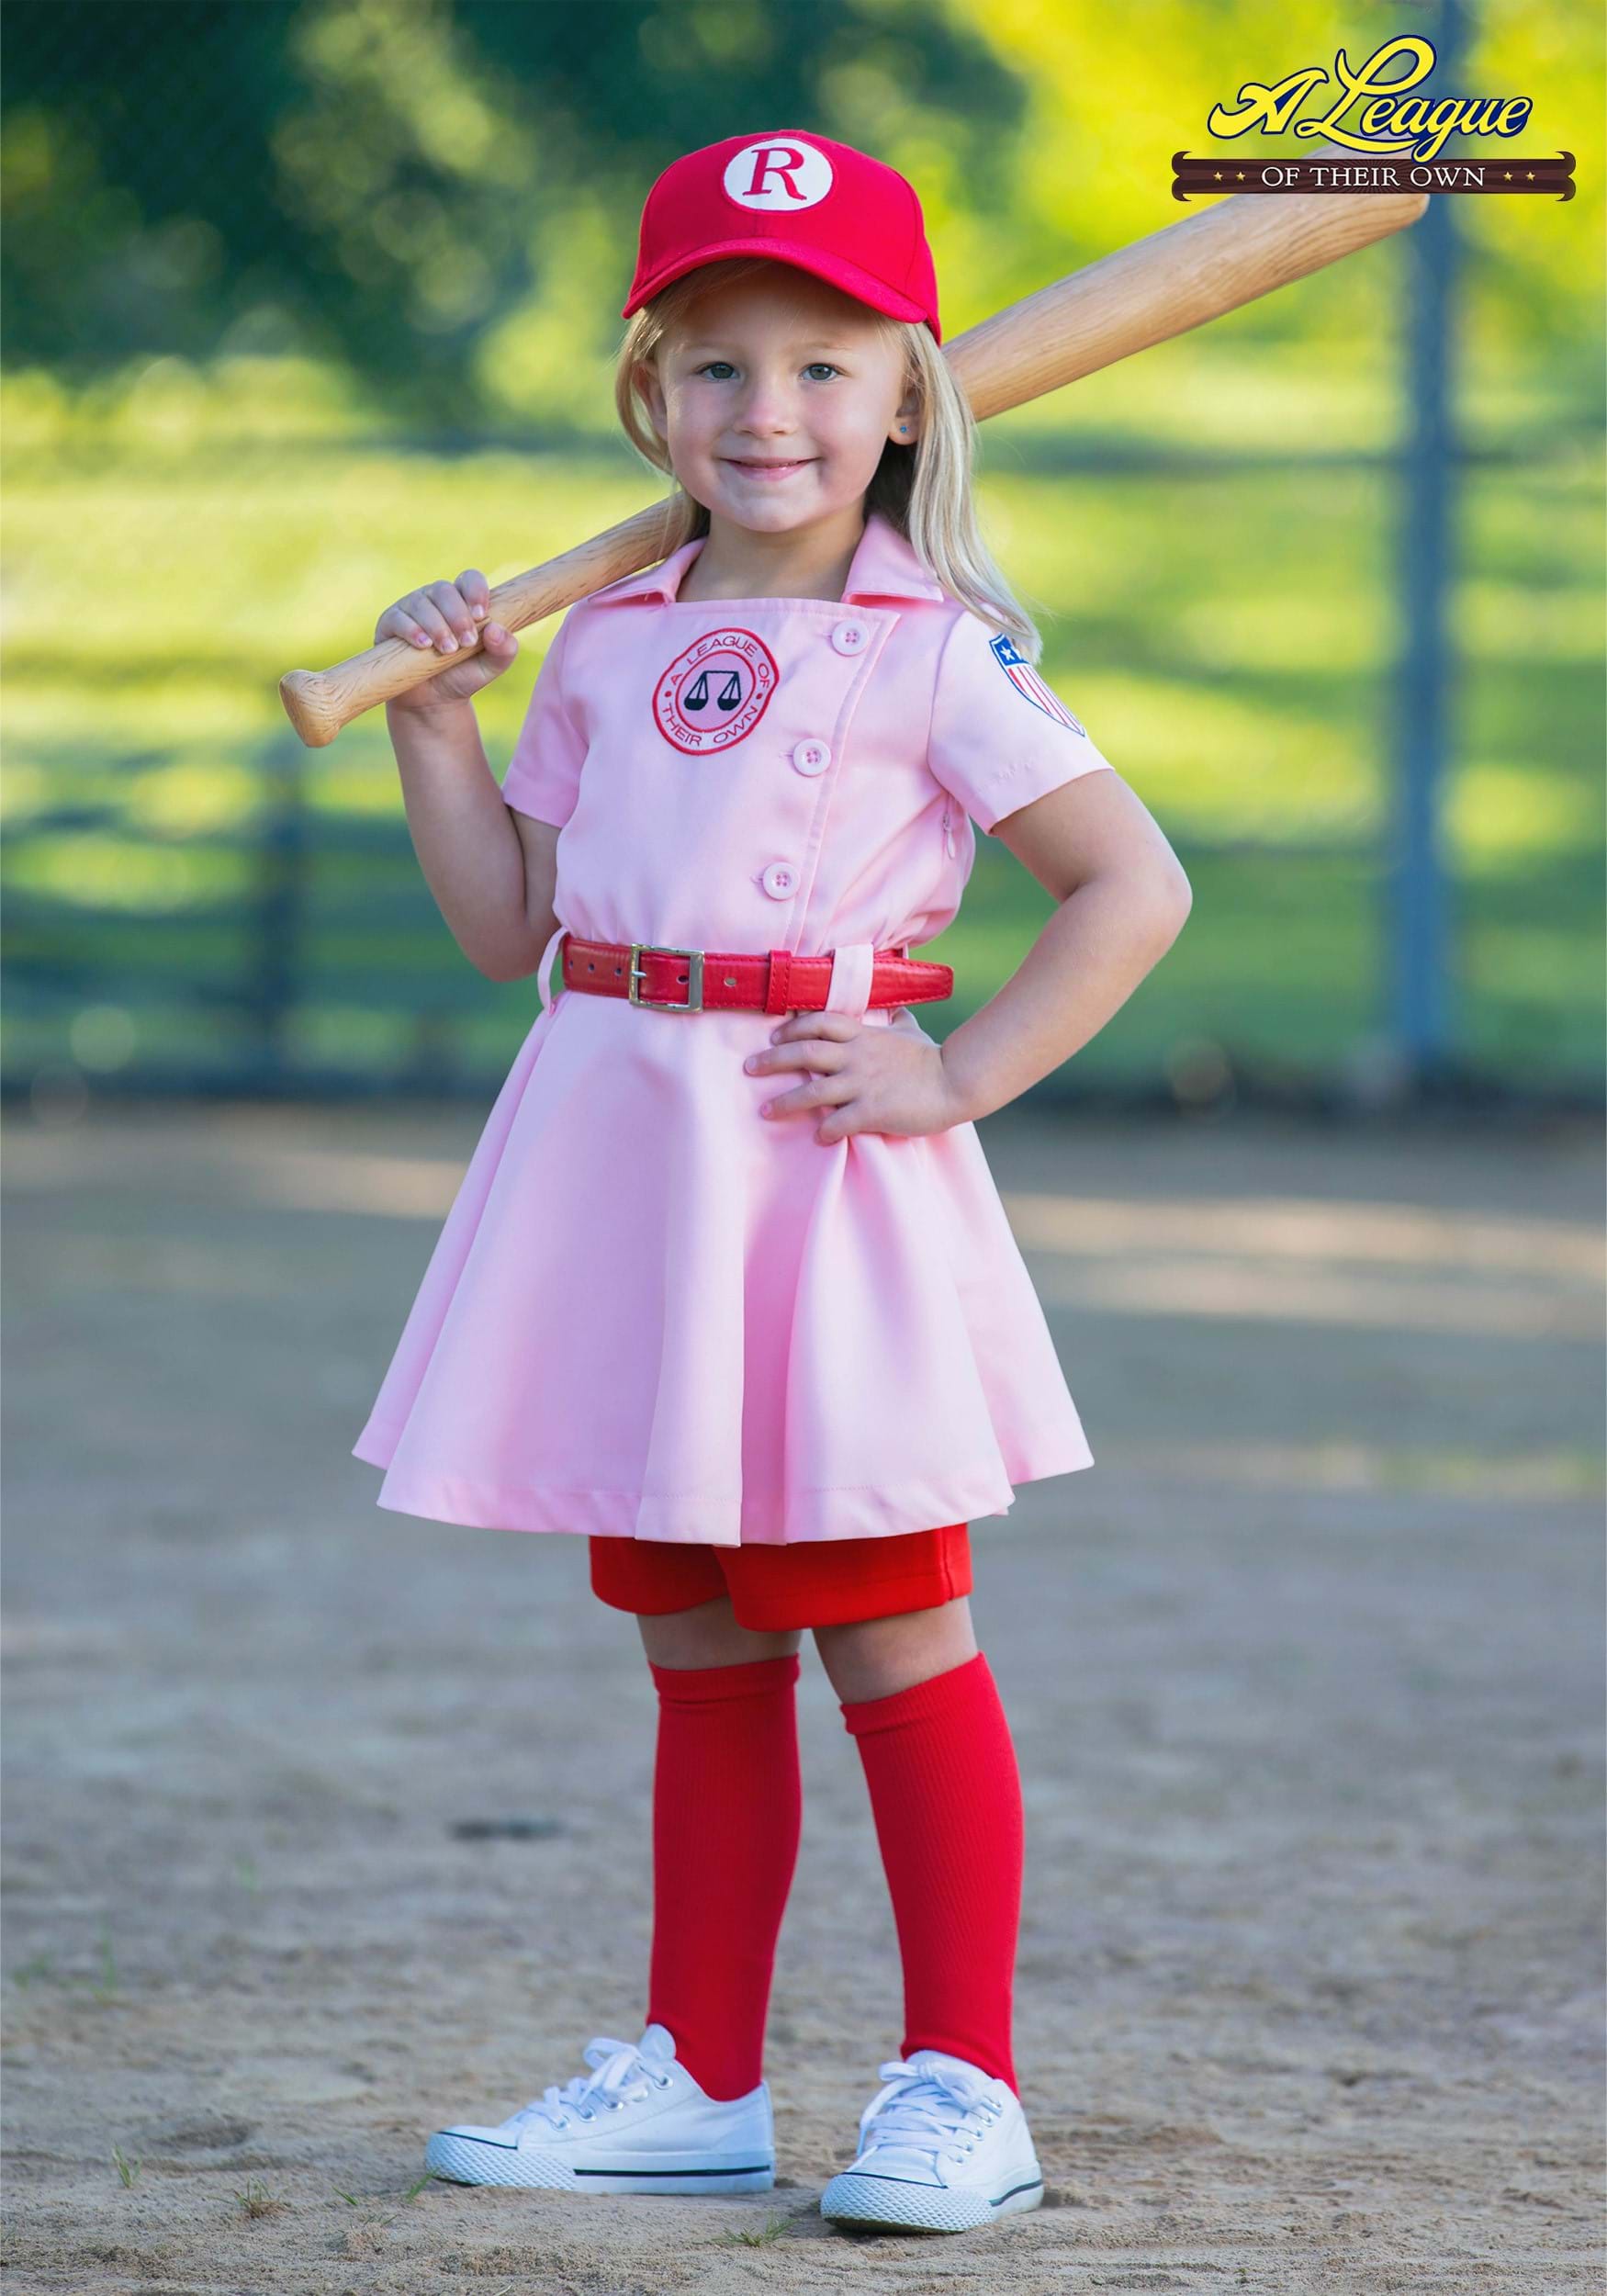 Child Baseball Player Costume